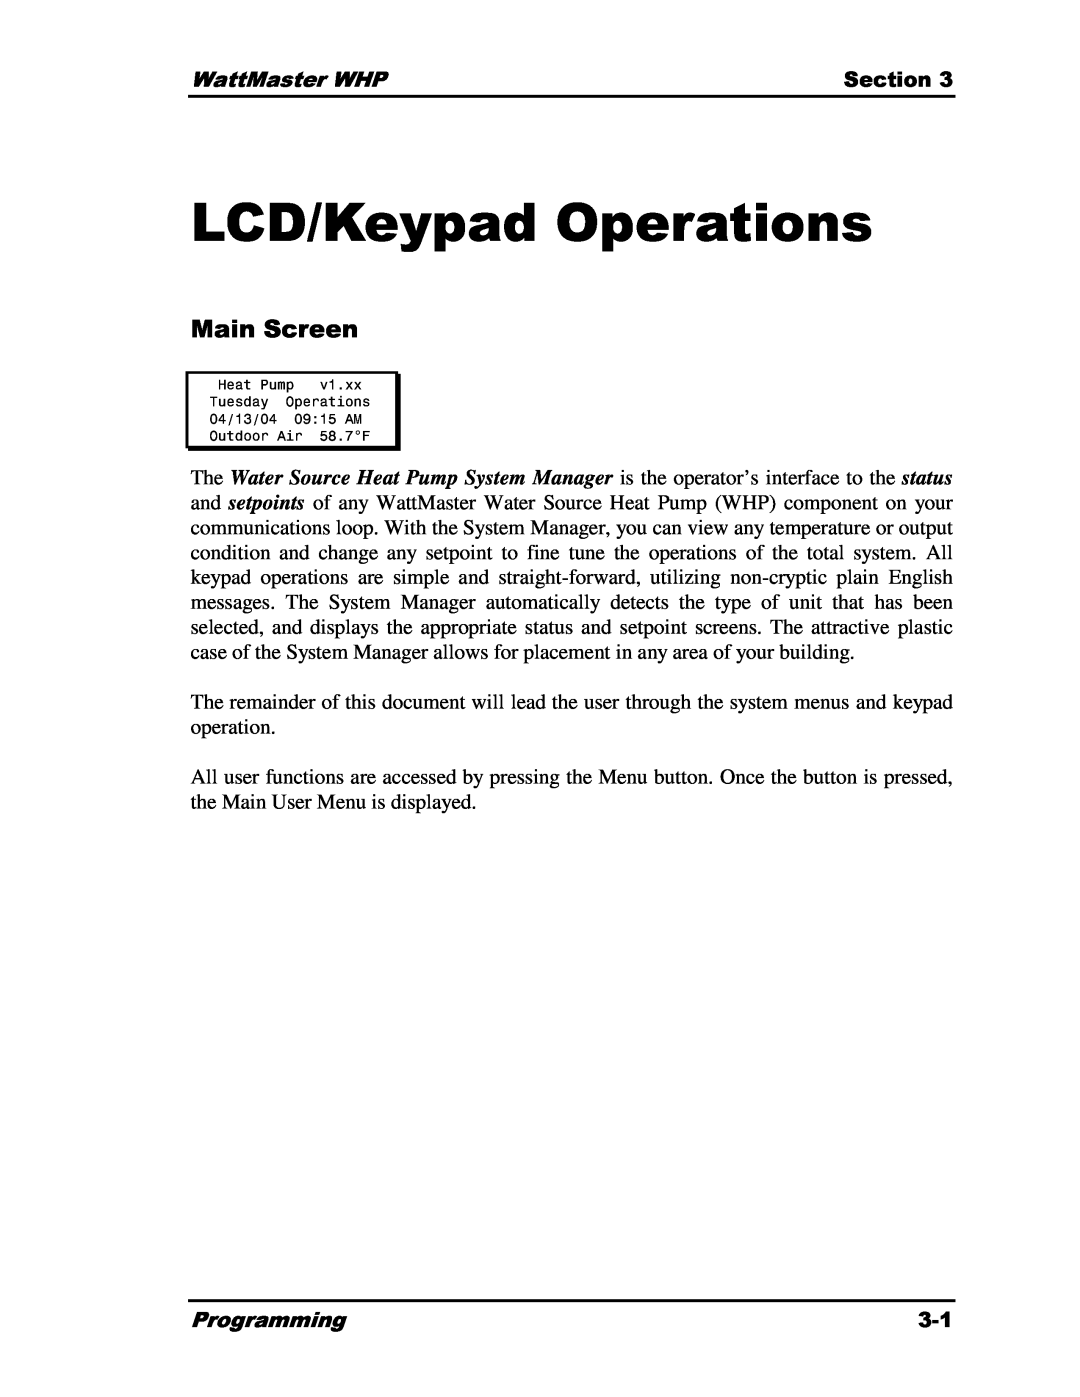 Heat Controller Water Source Heat Pump manual LCD/Keypad Operations, TuHatPumpv1xxesdayOperations 